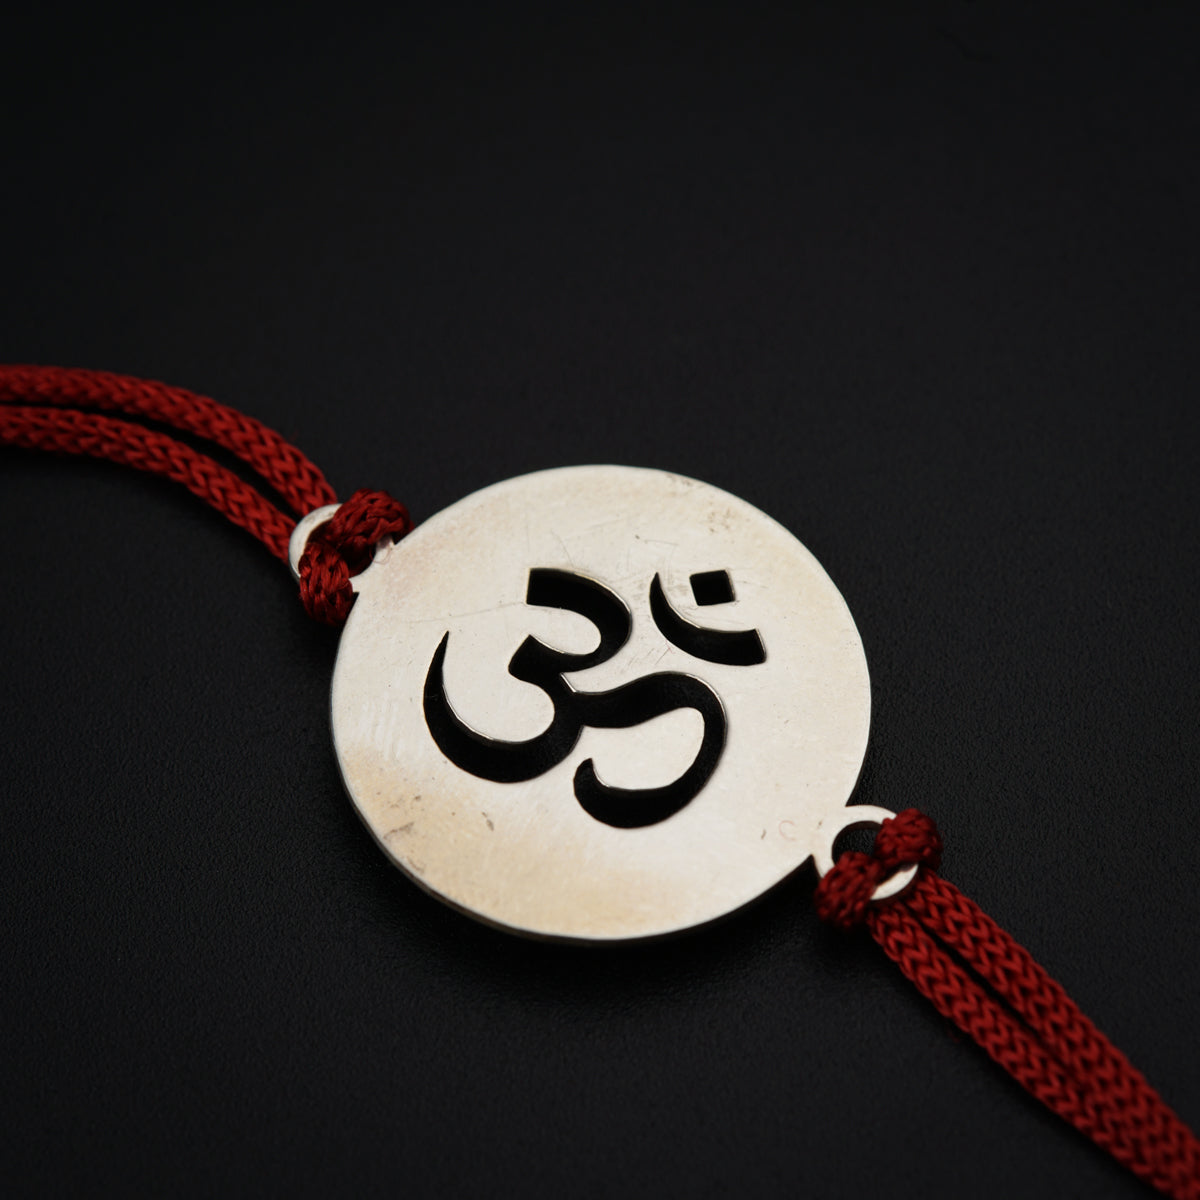 a bracelet with an omen symbol on it